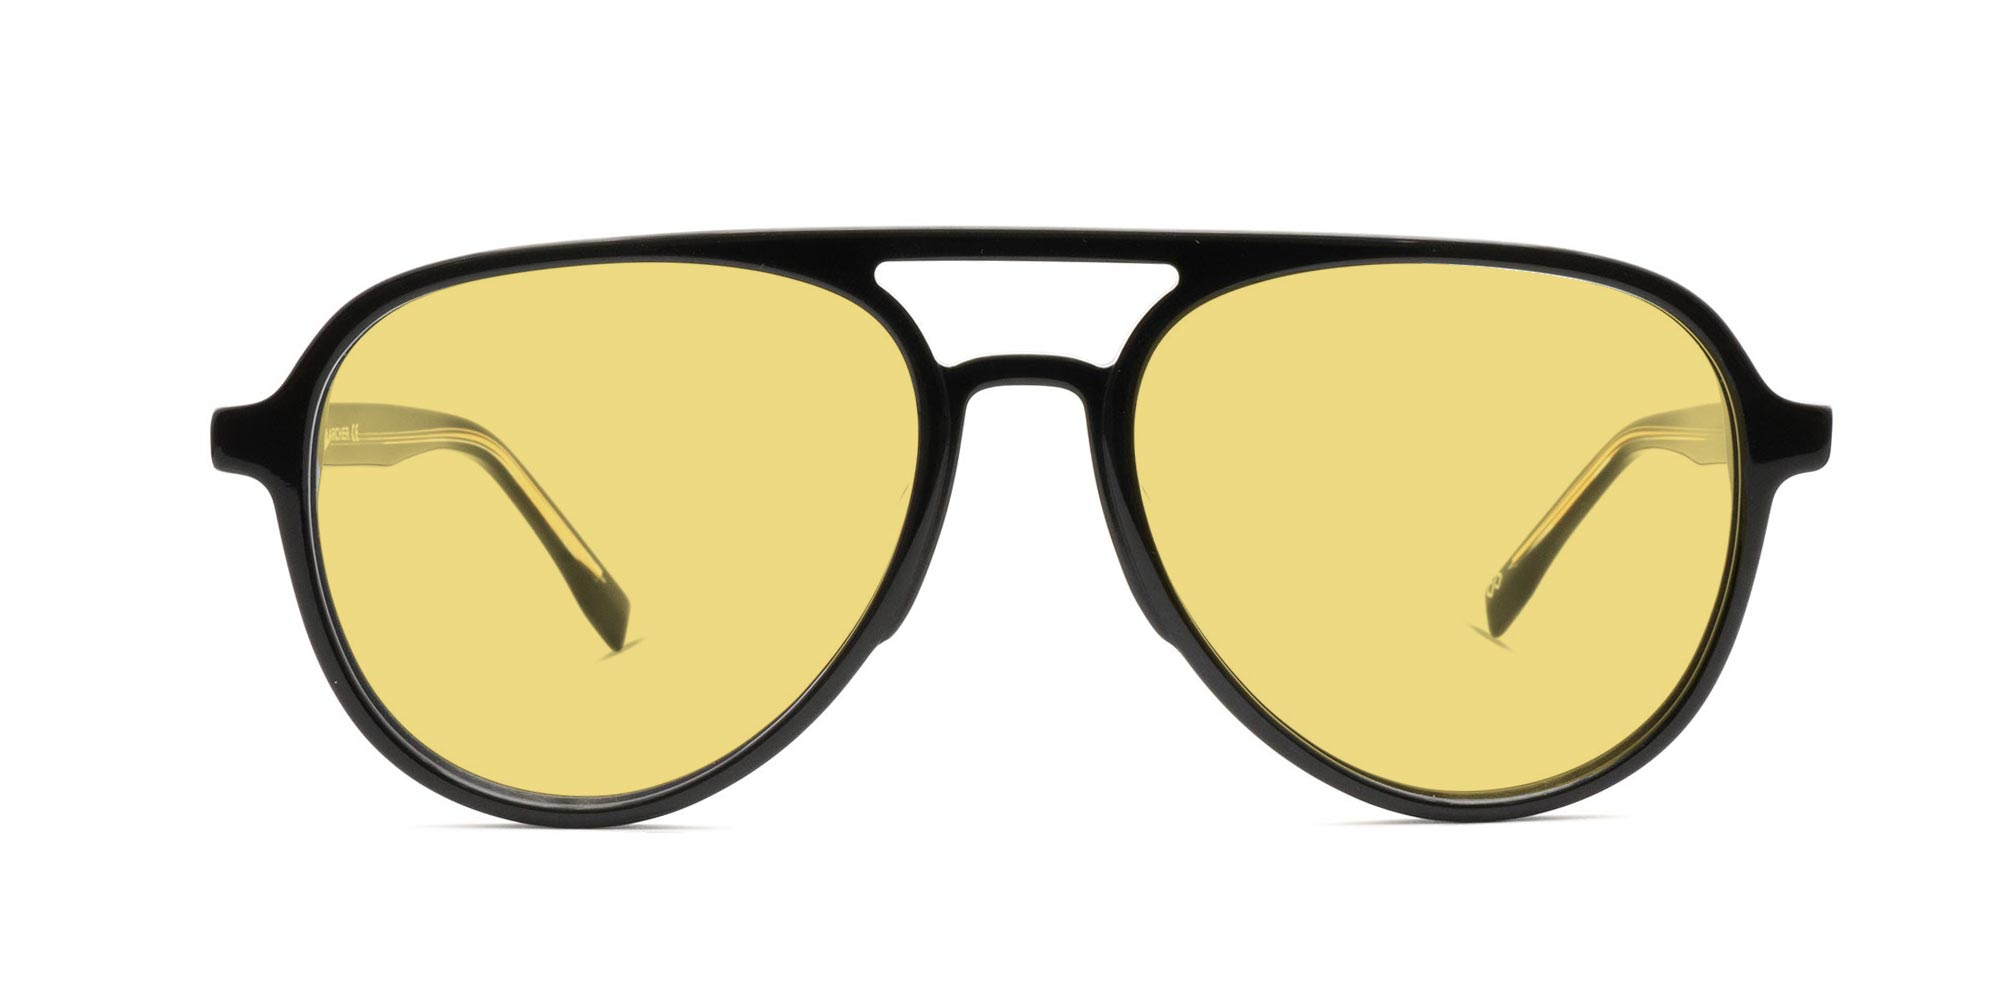 Aviator Sunglasses With Yellow Tint-1